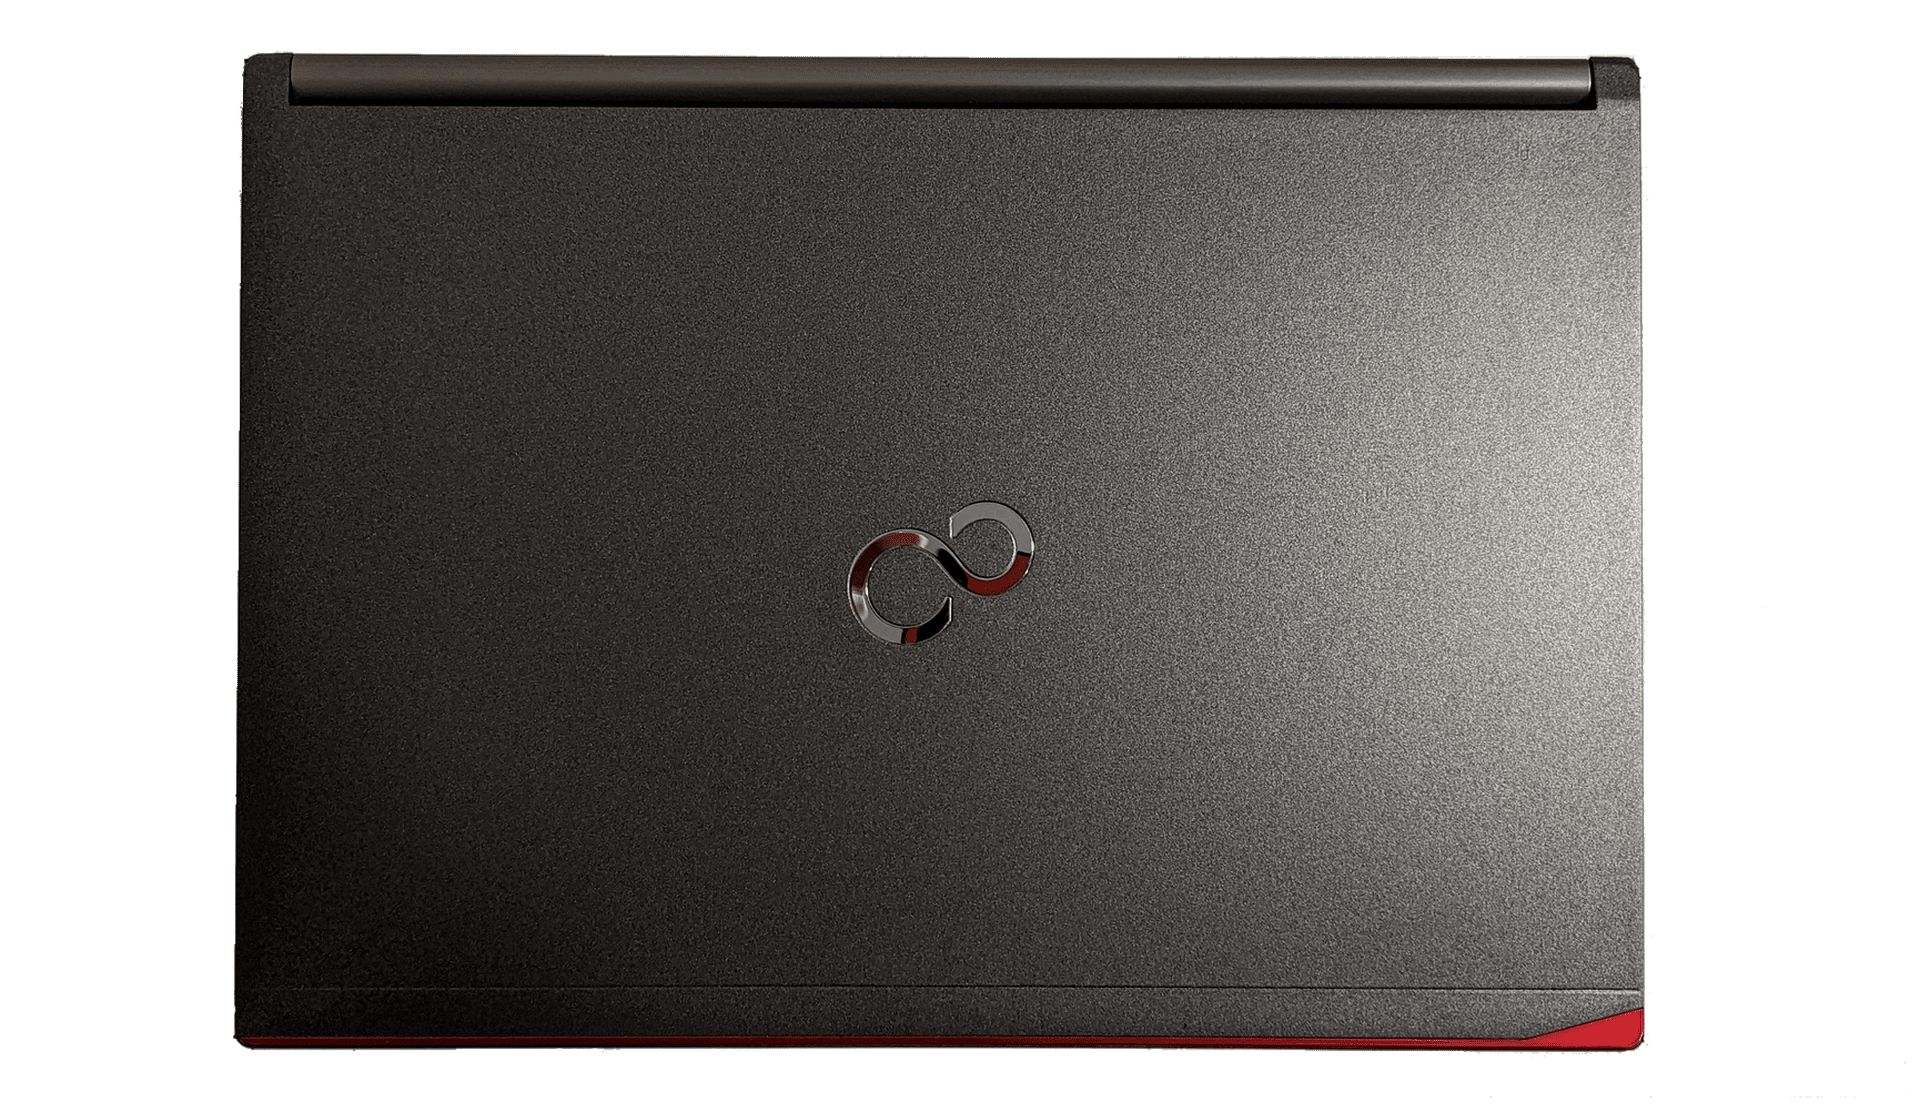 Fujitsu LifeBook E736 13.3" 1366x768 i5-6300U 8GB 180GB батерия 3 часа